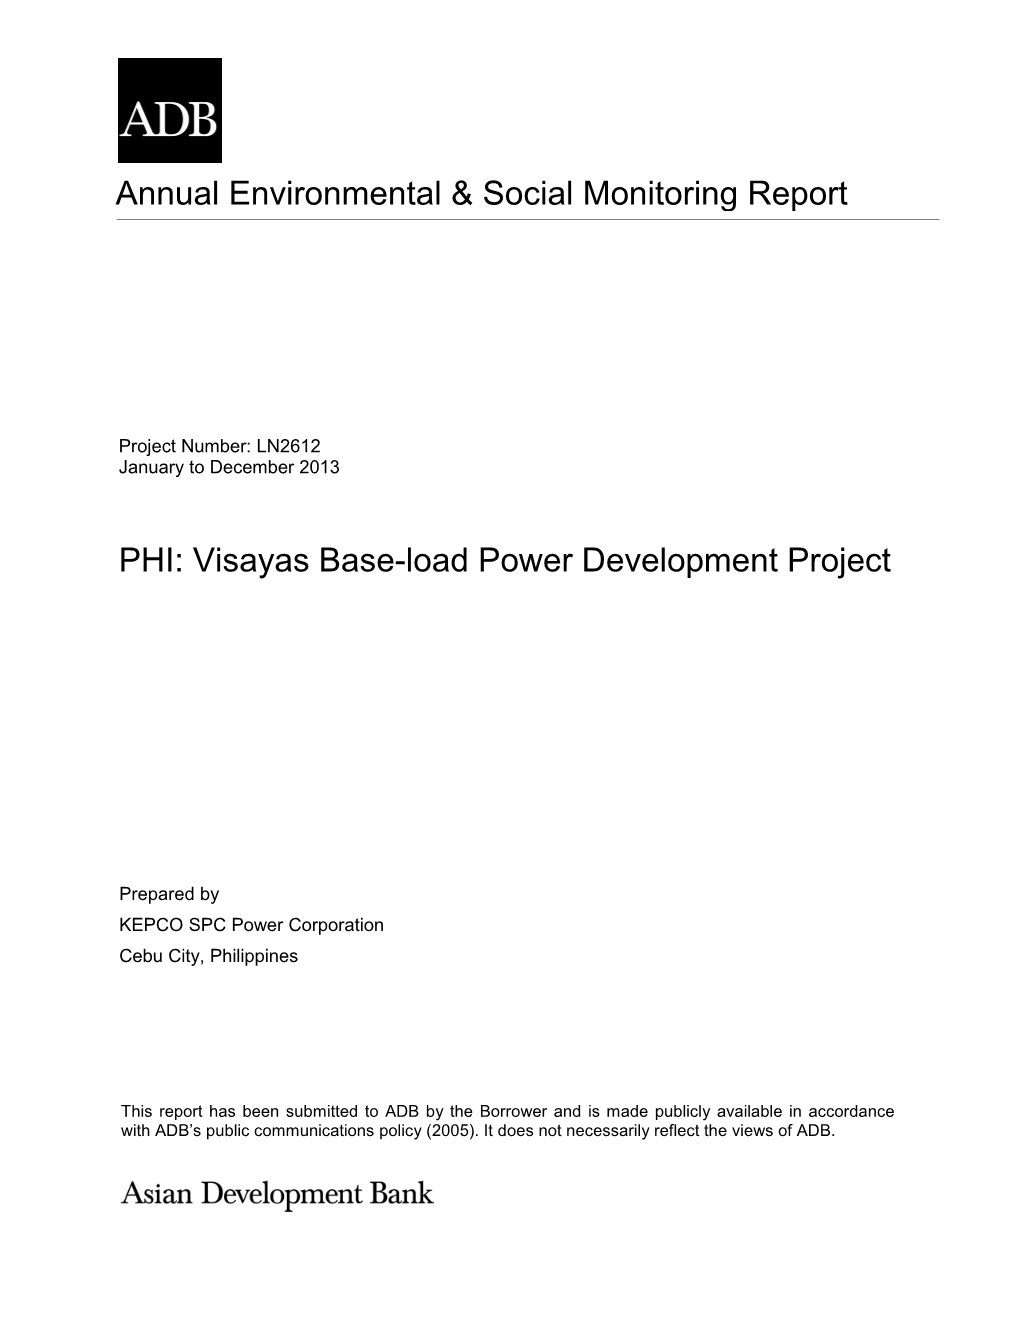 Annual Environmental & Social Monitoring Report PHI: Visayas